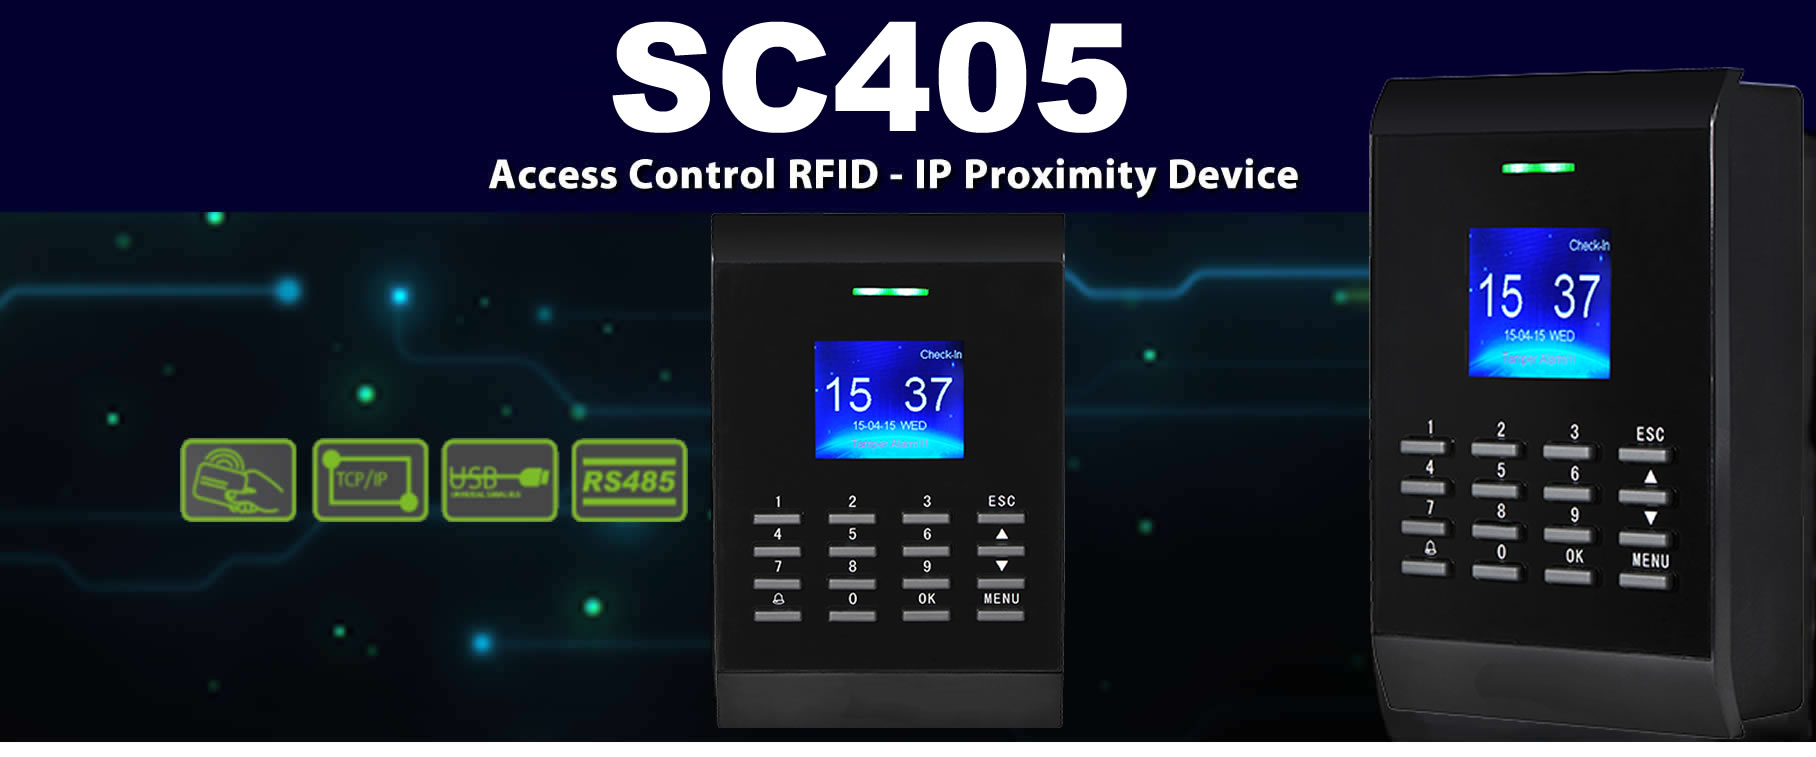 sc405 Access Control RFID - IP Proximity Device